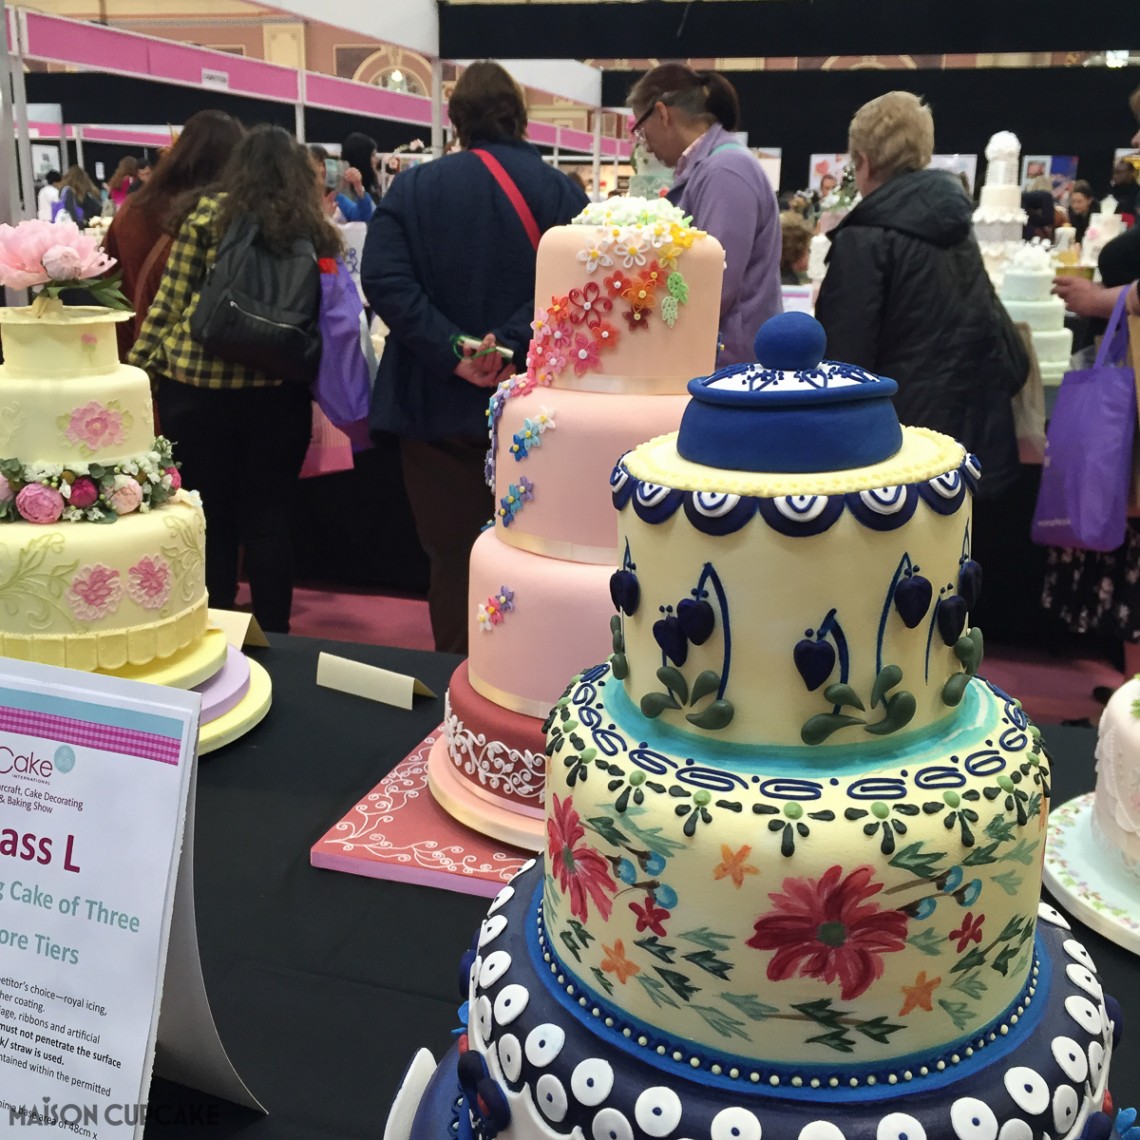 Cake International (Apr 2020), London UK - Trade Show